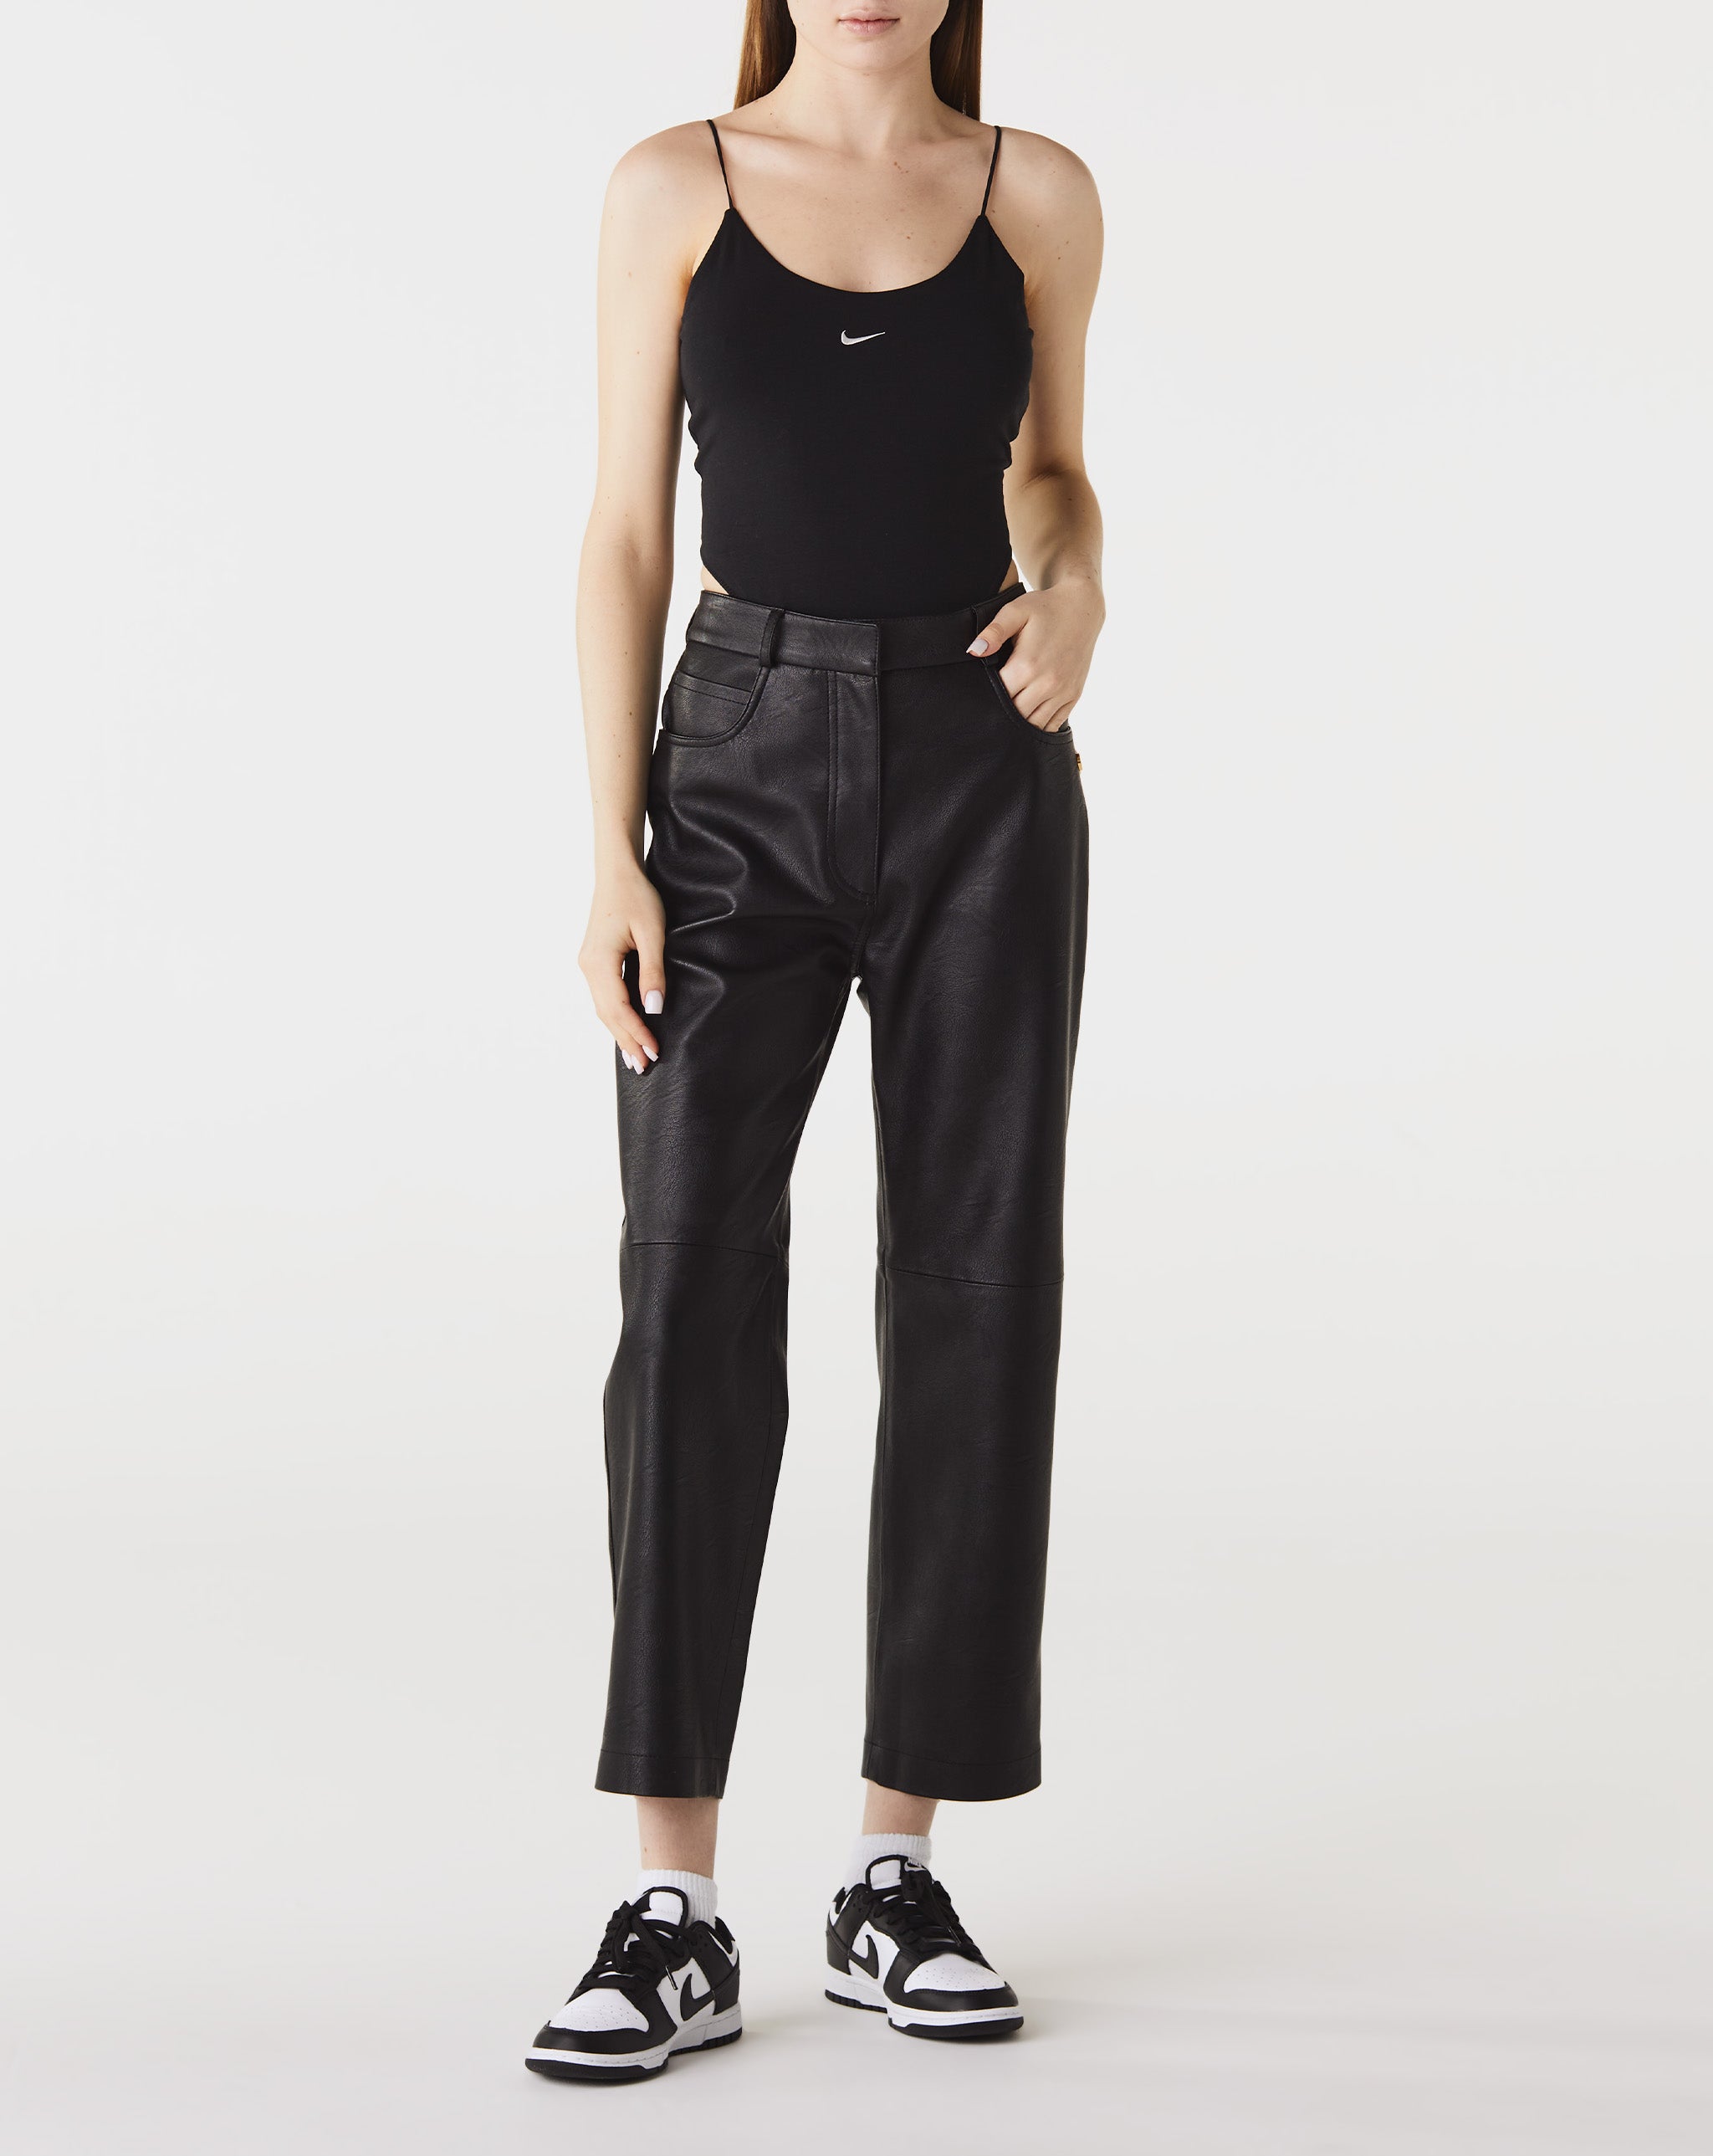 Nike waffle Women's Chill Knit Cami Bodysuit  - Cheap 127-0 Jordan outlet